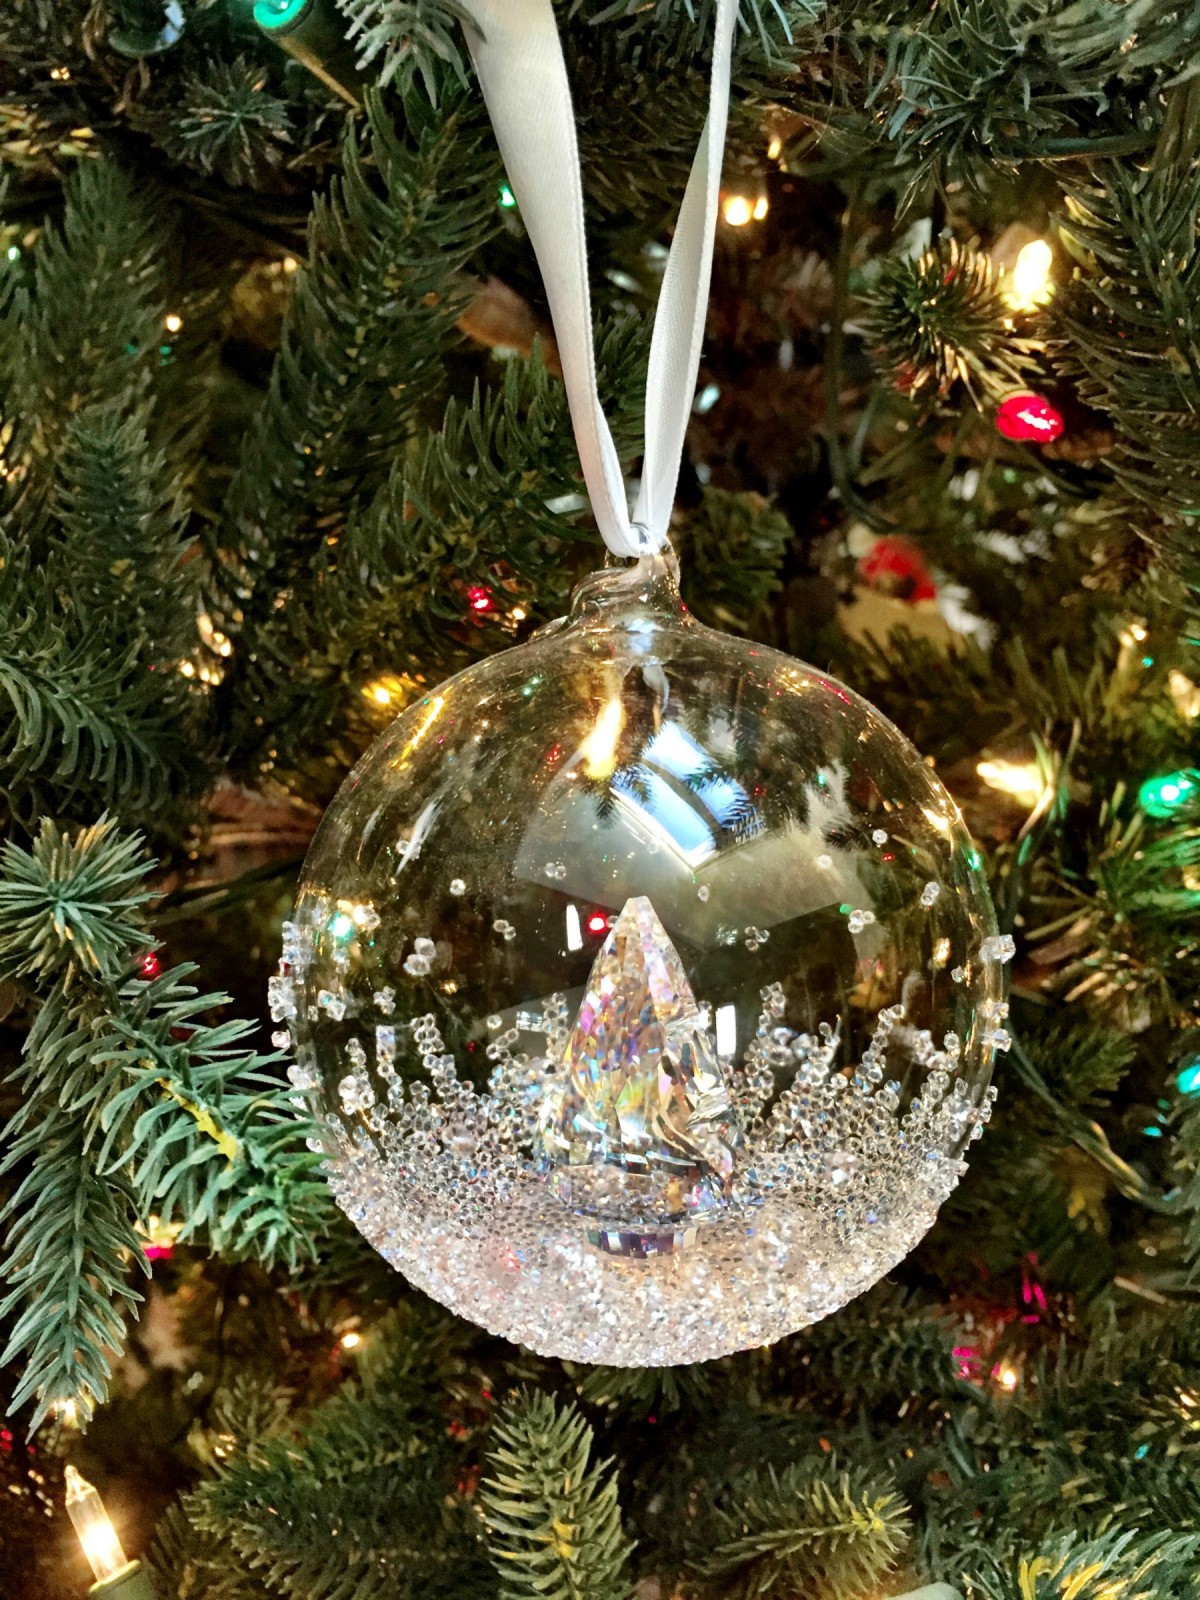 Decorating Glass Ball Christmas Ornaments | My Frugal Christmas